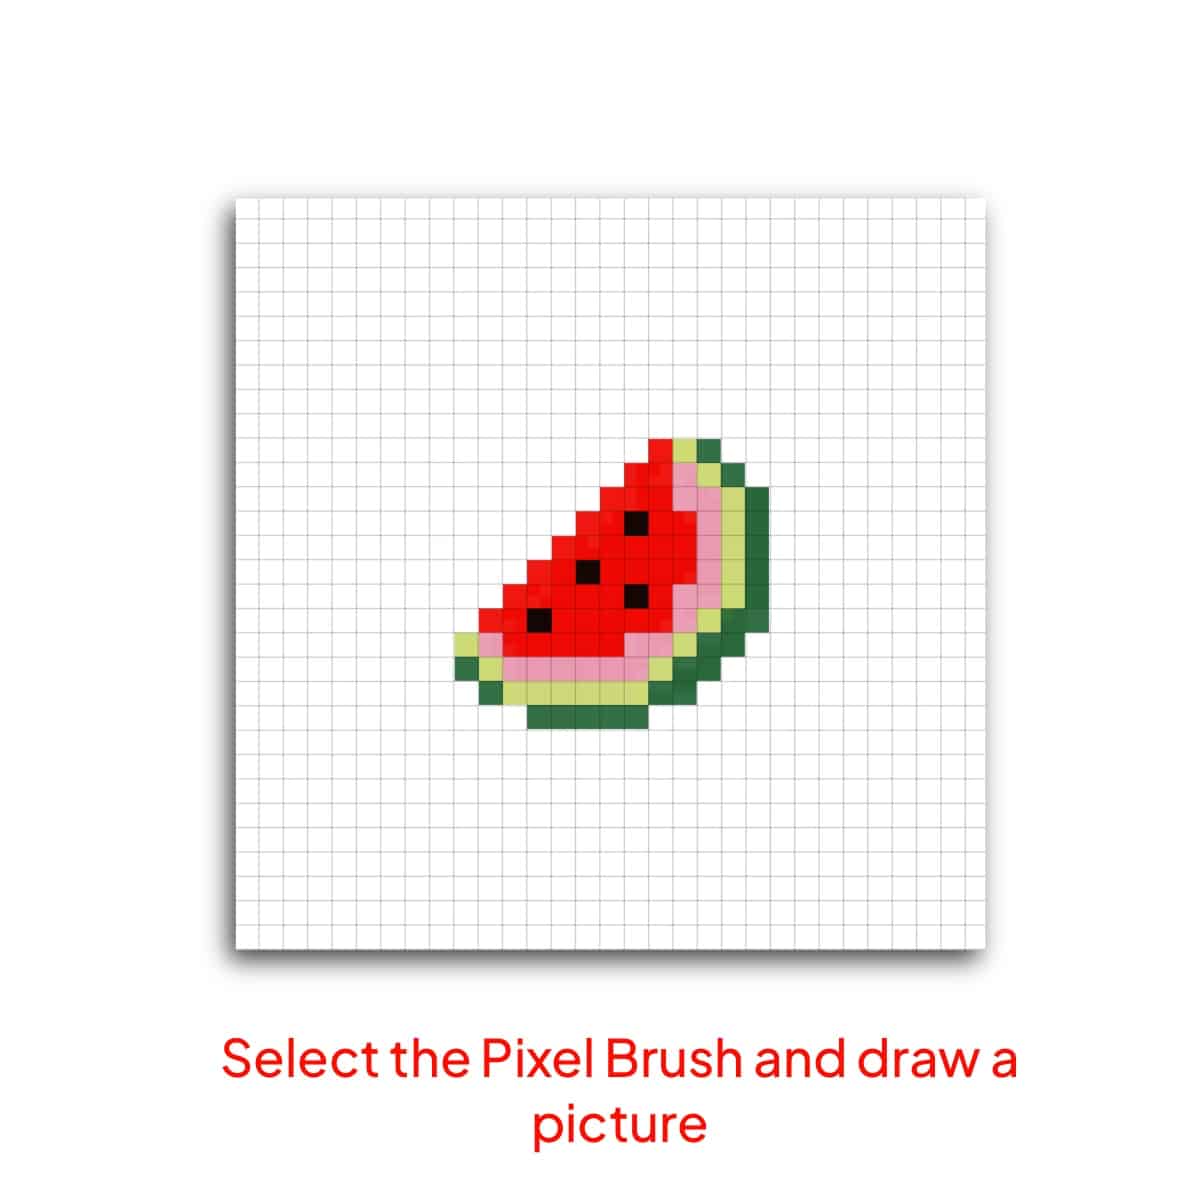 Pixel brush